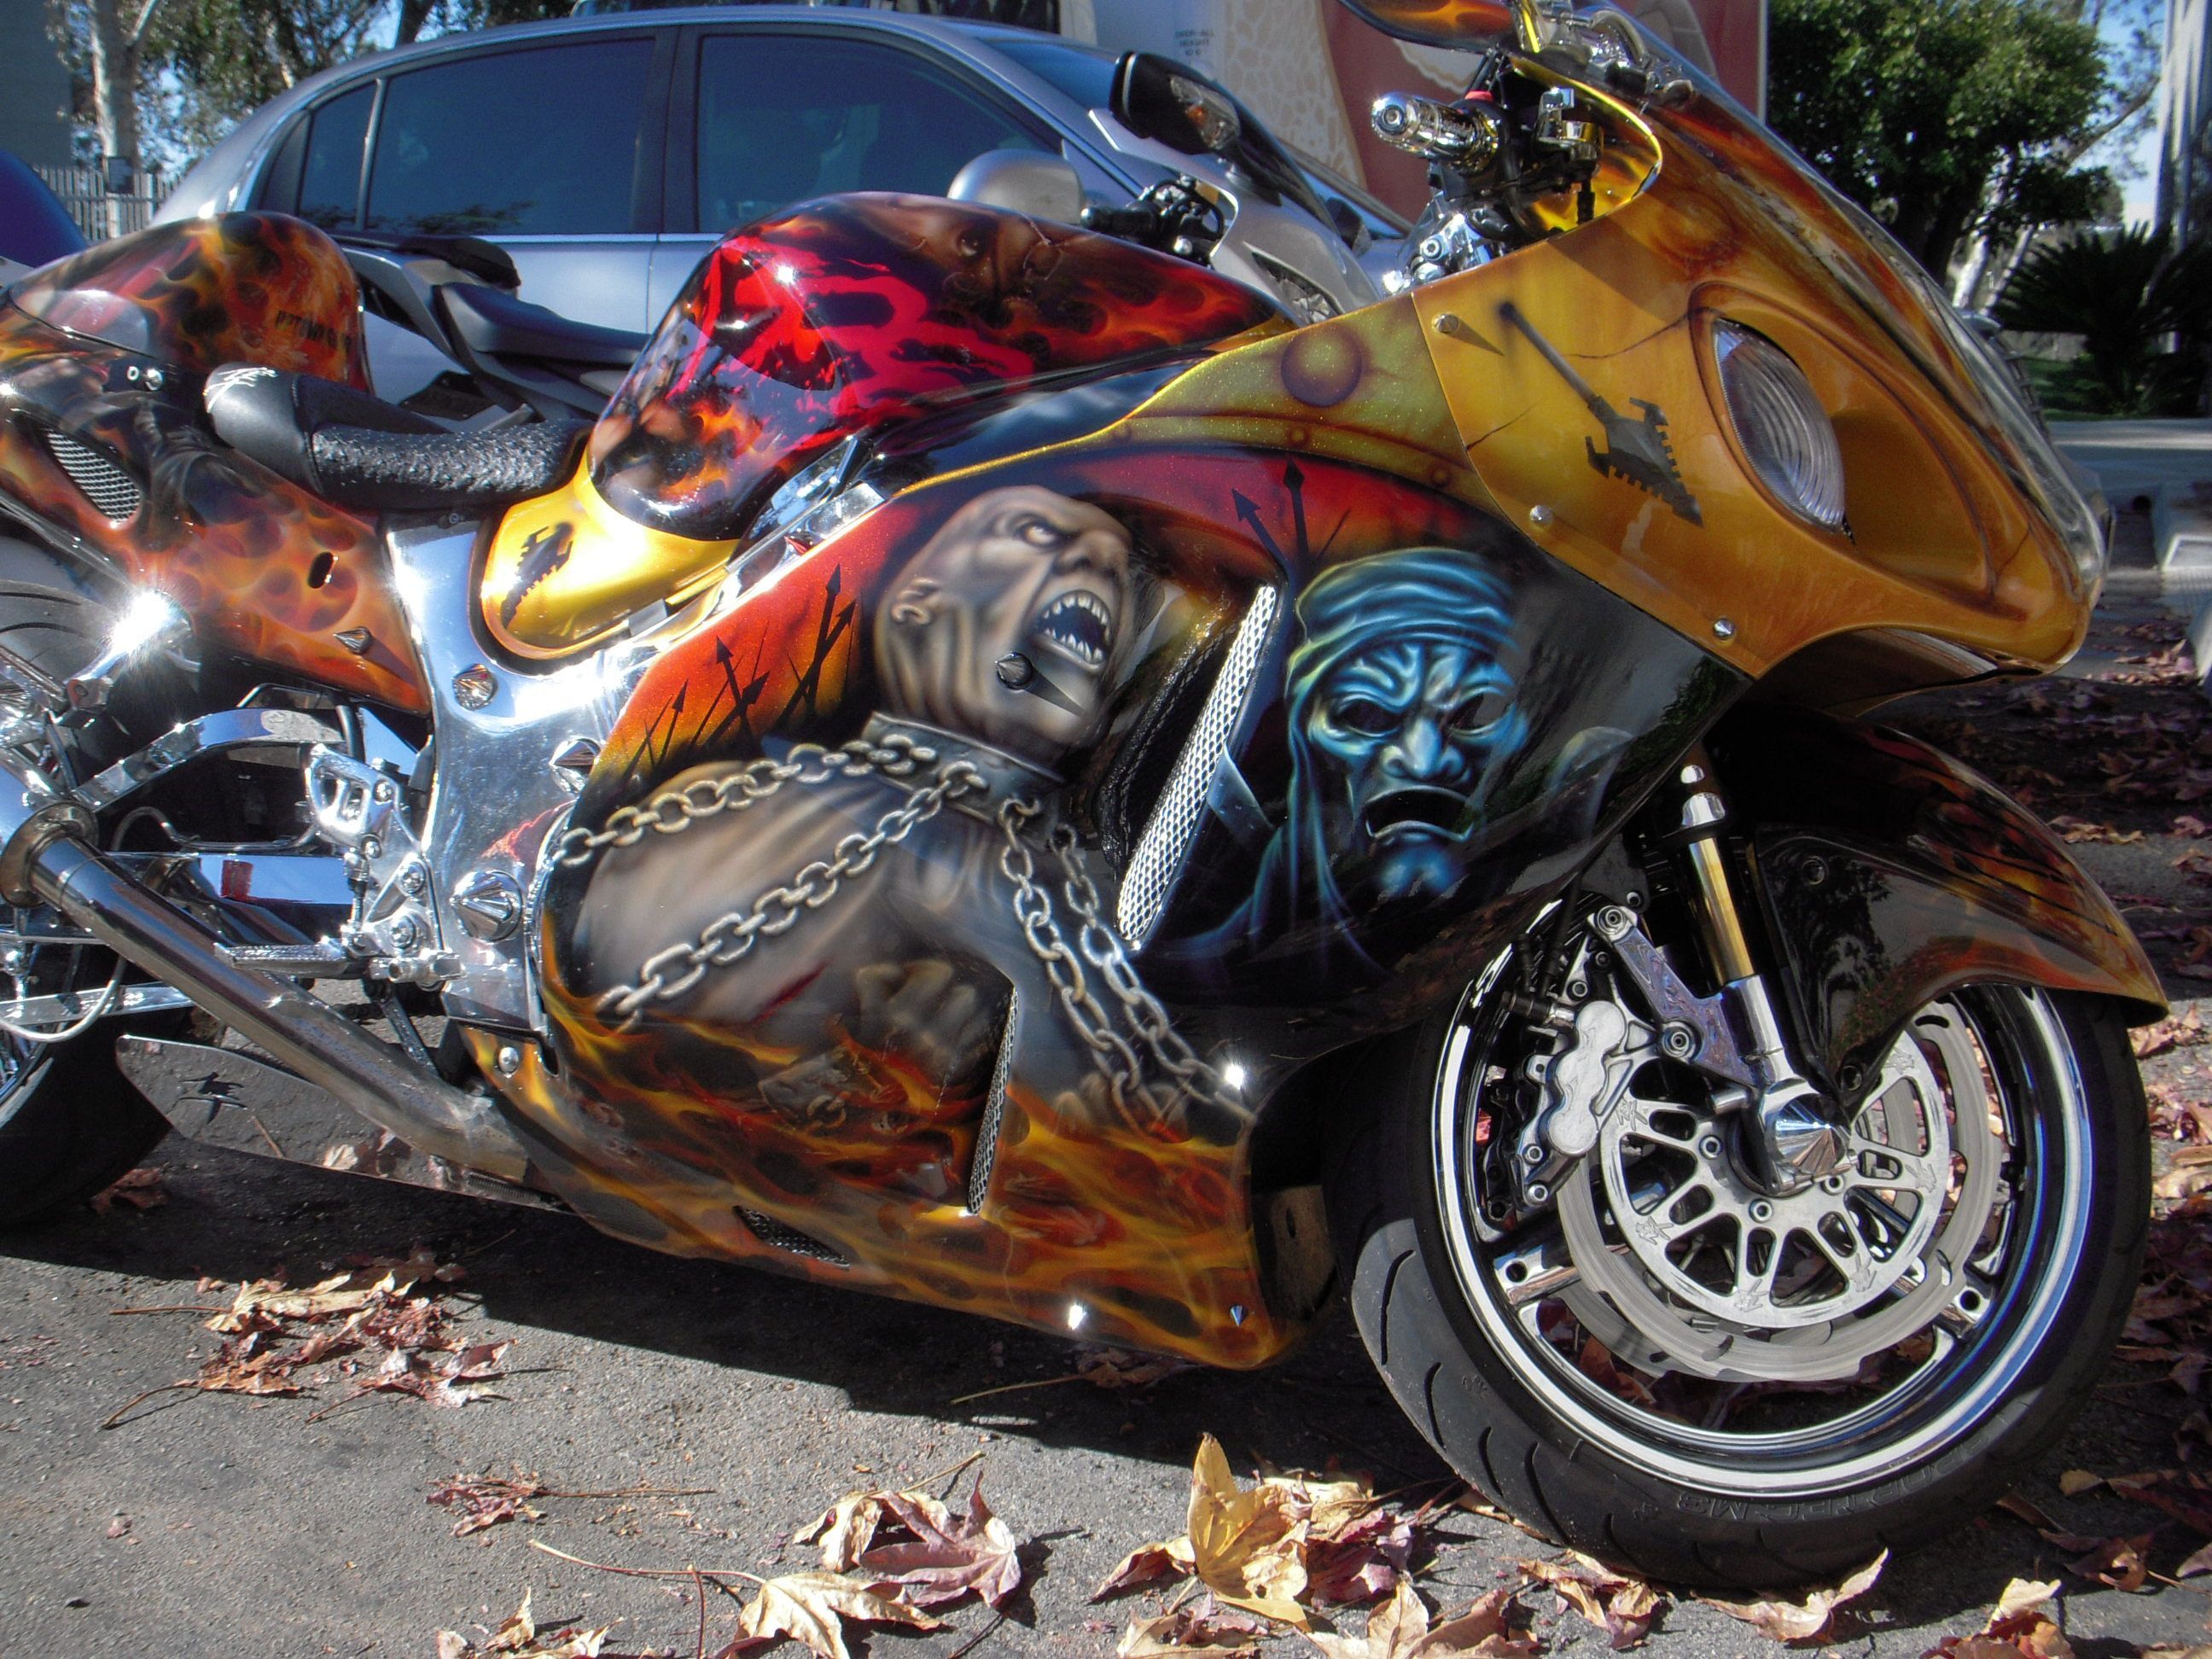 Custom paint job on a motorcycle